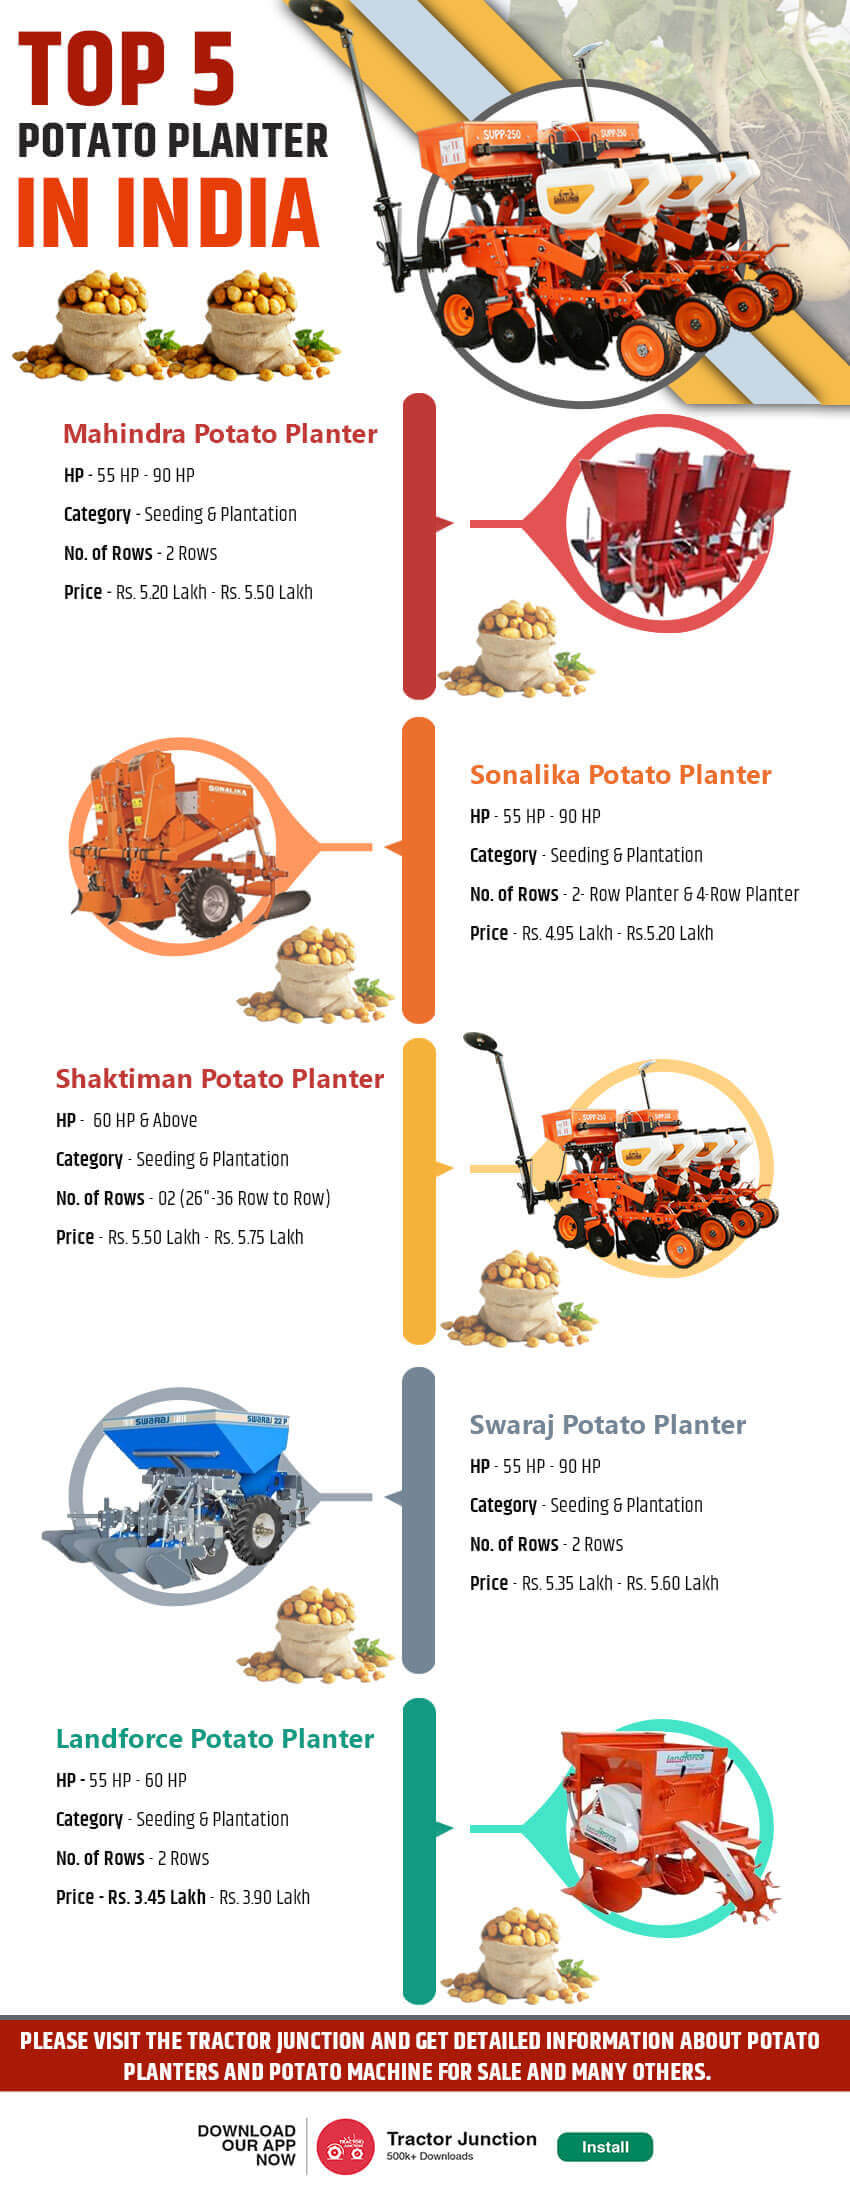 Top 5 Potato Planter in India